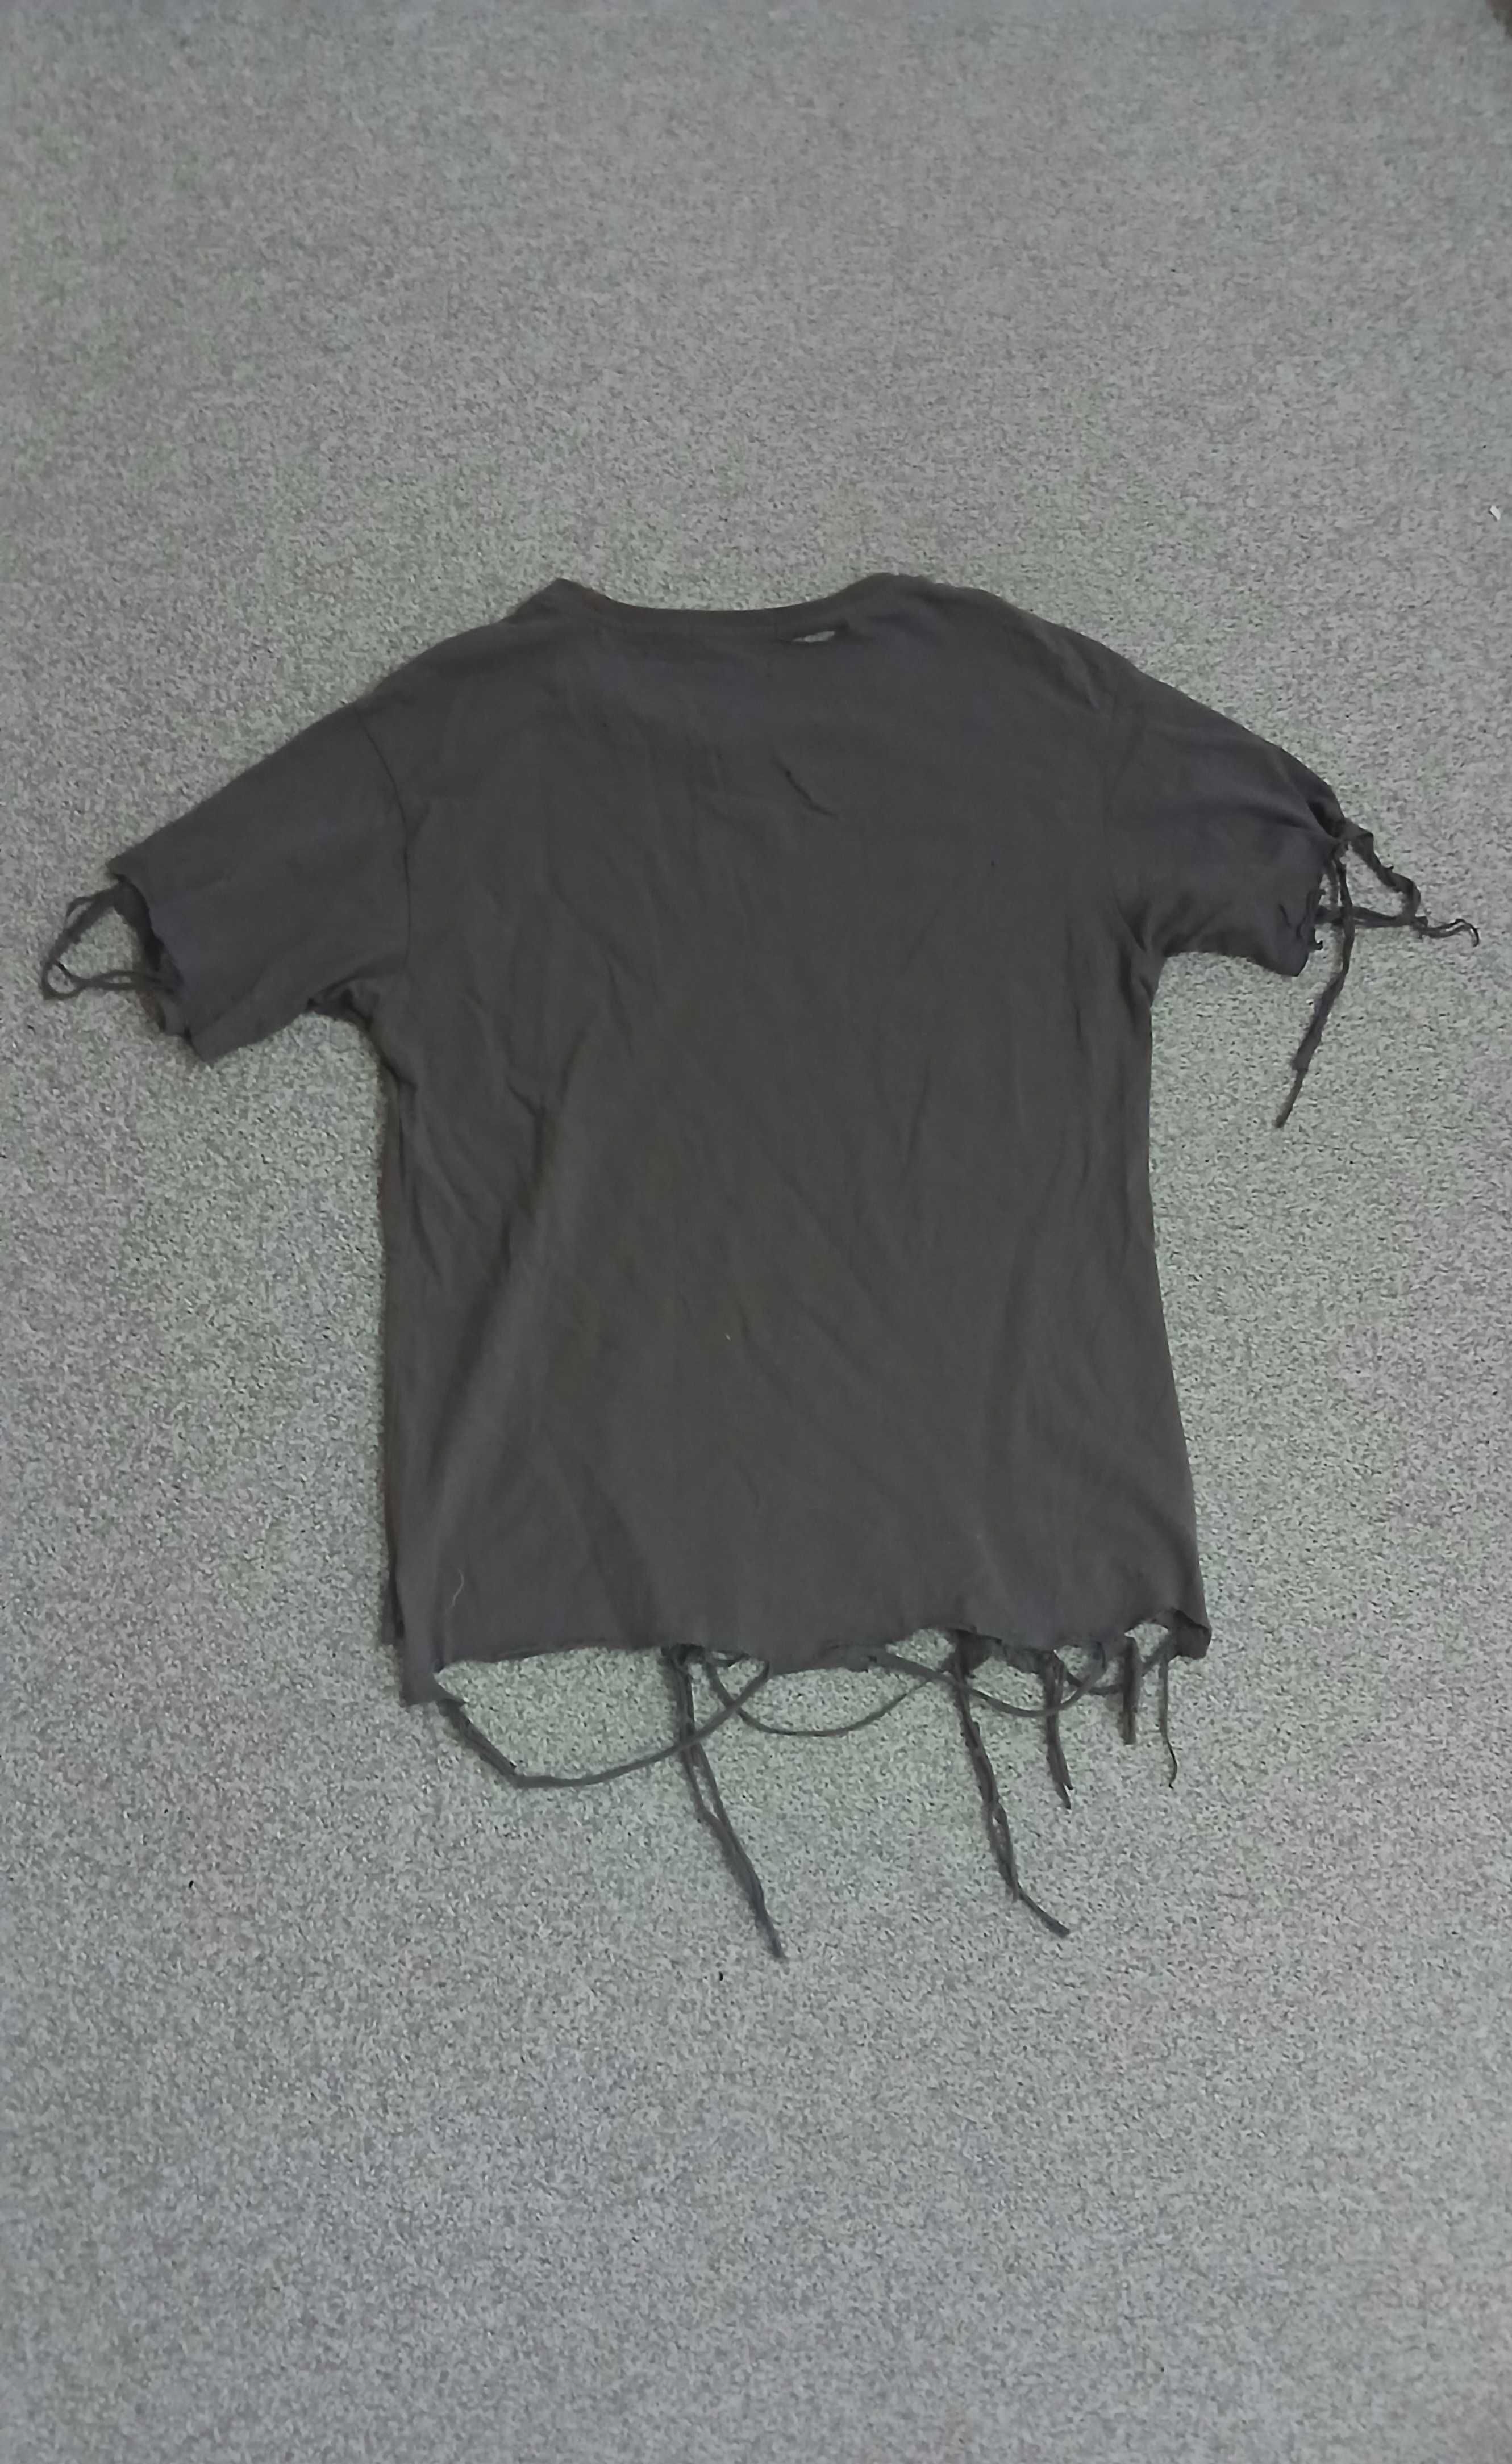 t shirt undercover scab distressed destroyed koszula jun takahashi